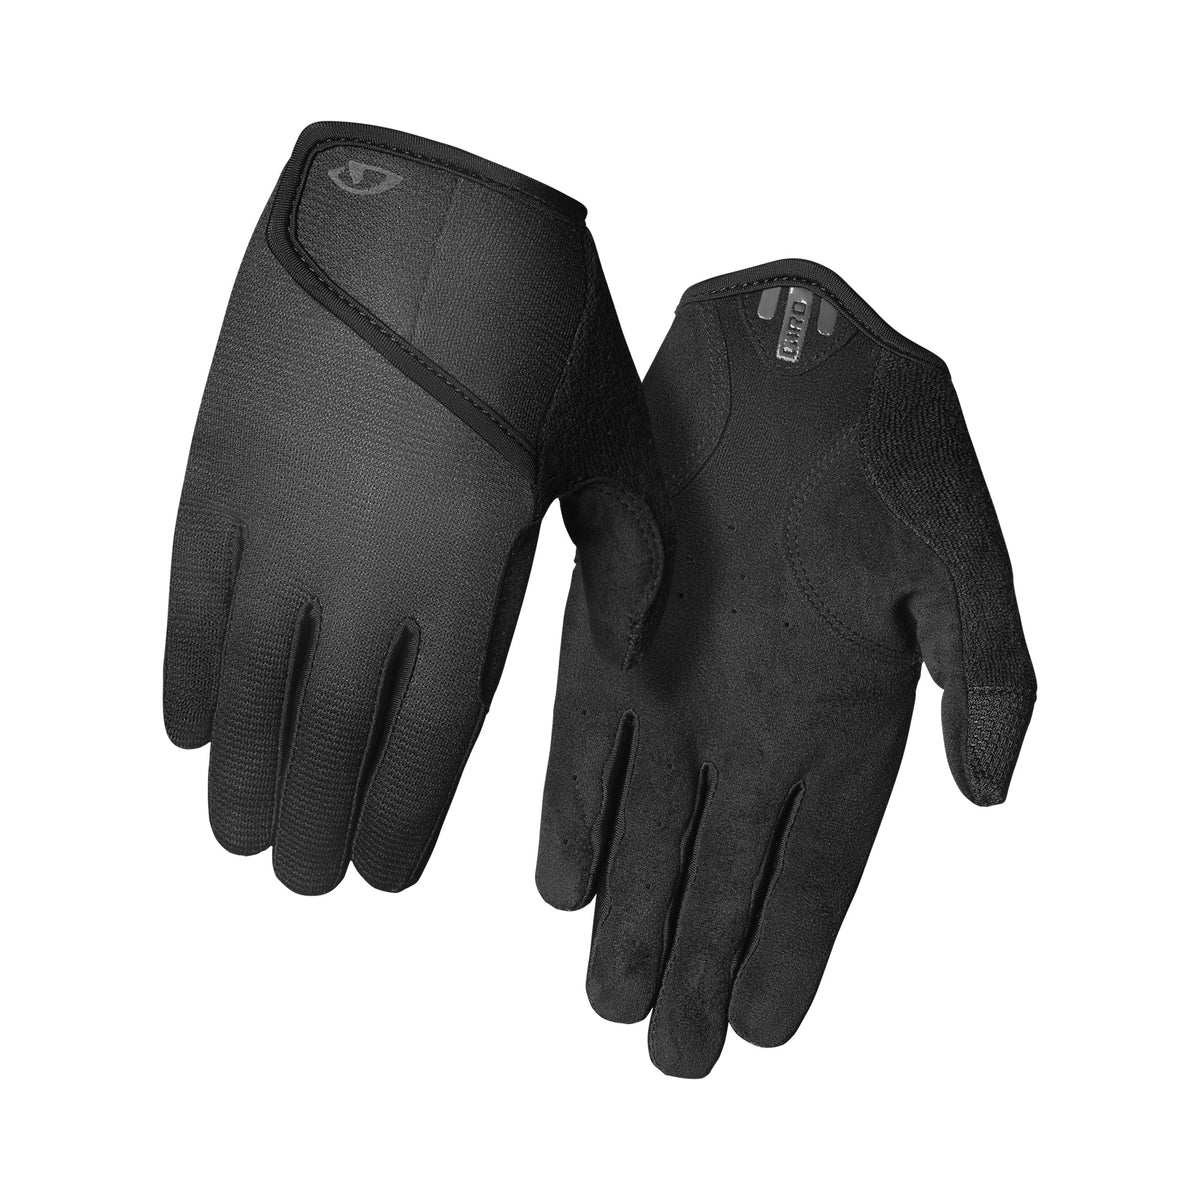 Giro Dnd Junior 2 Cycling Gloves